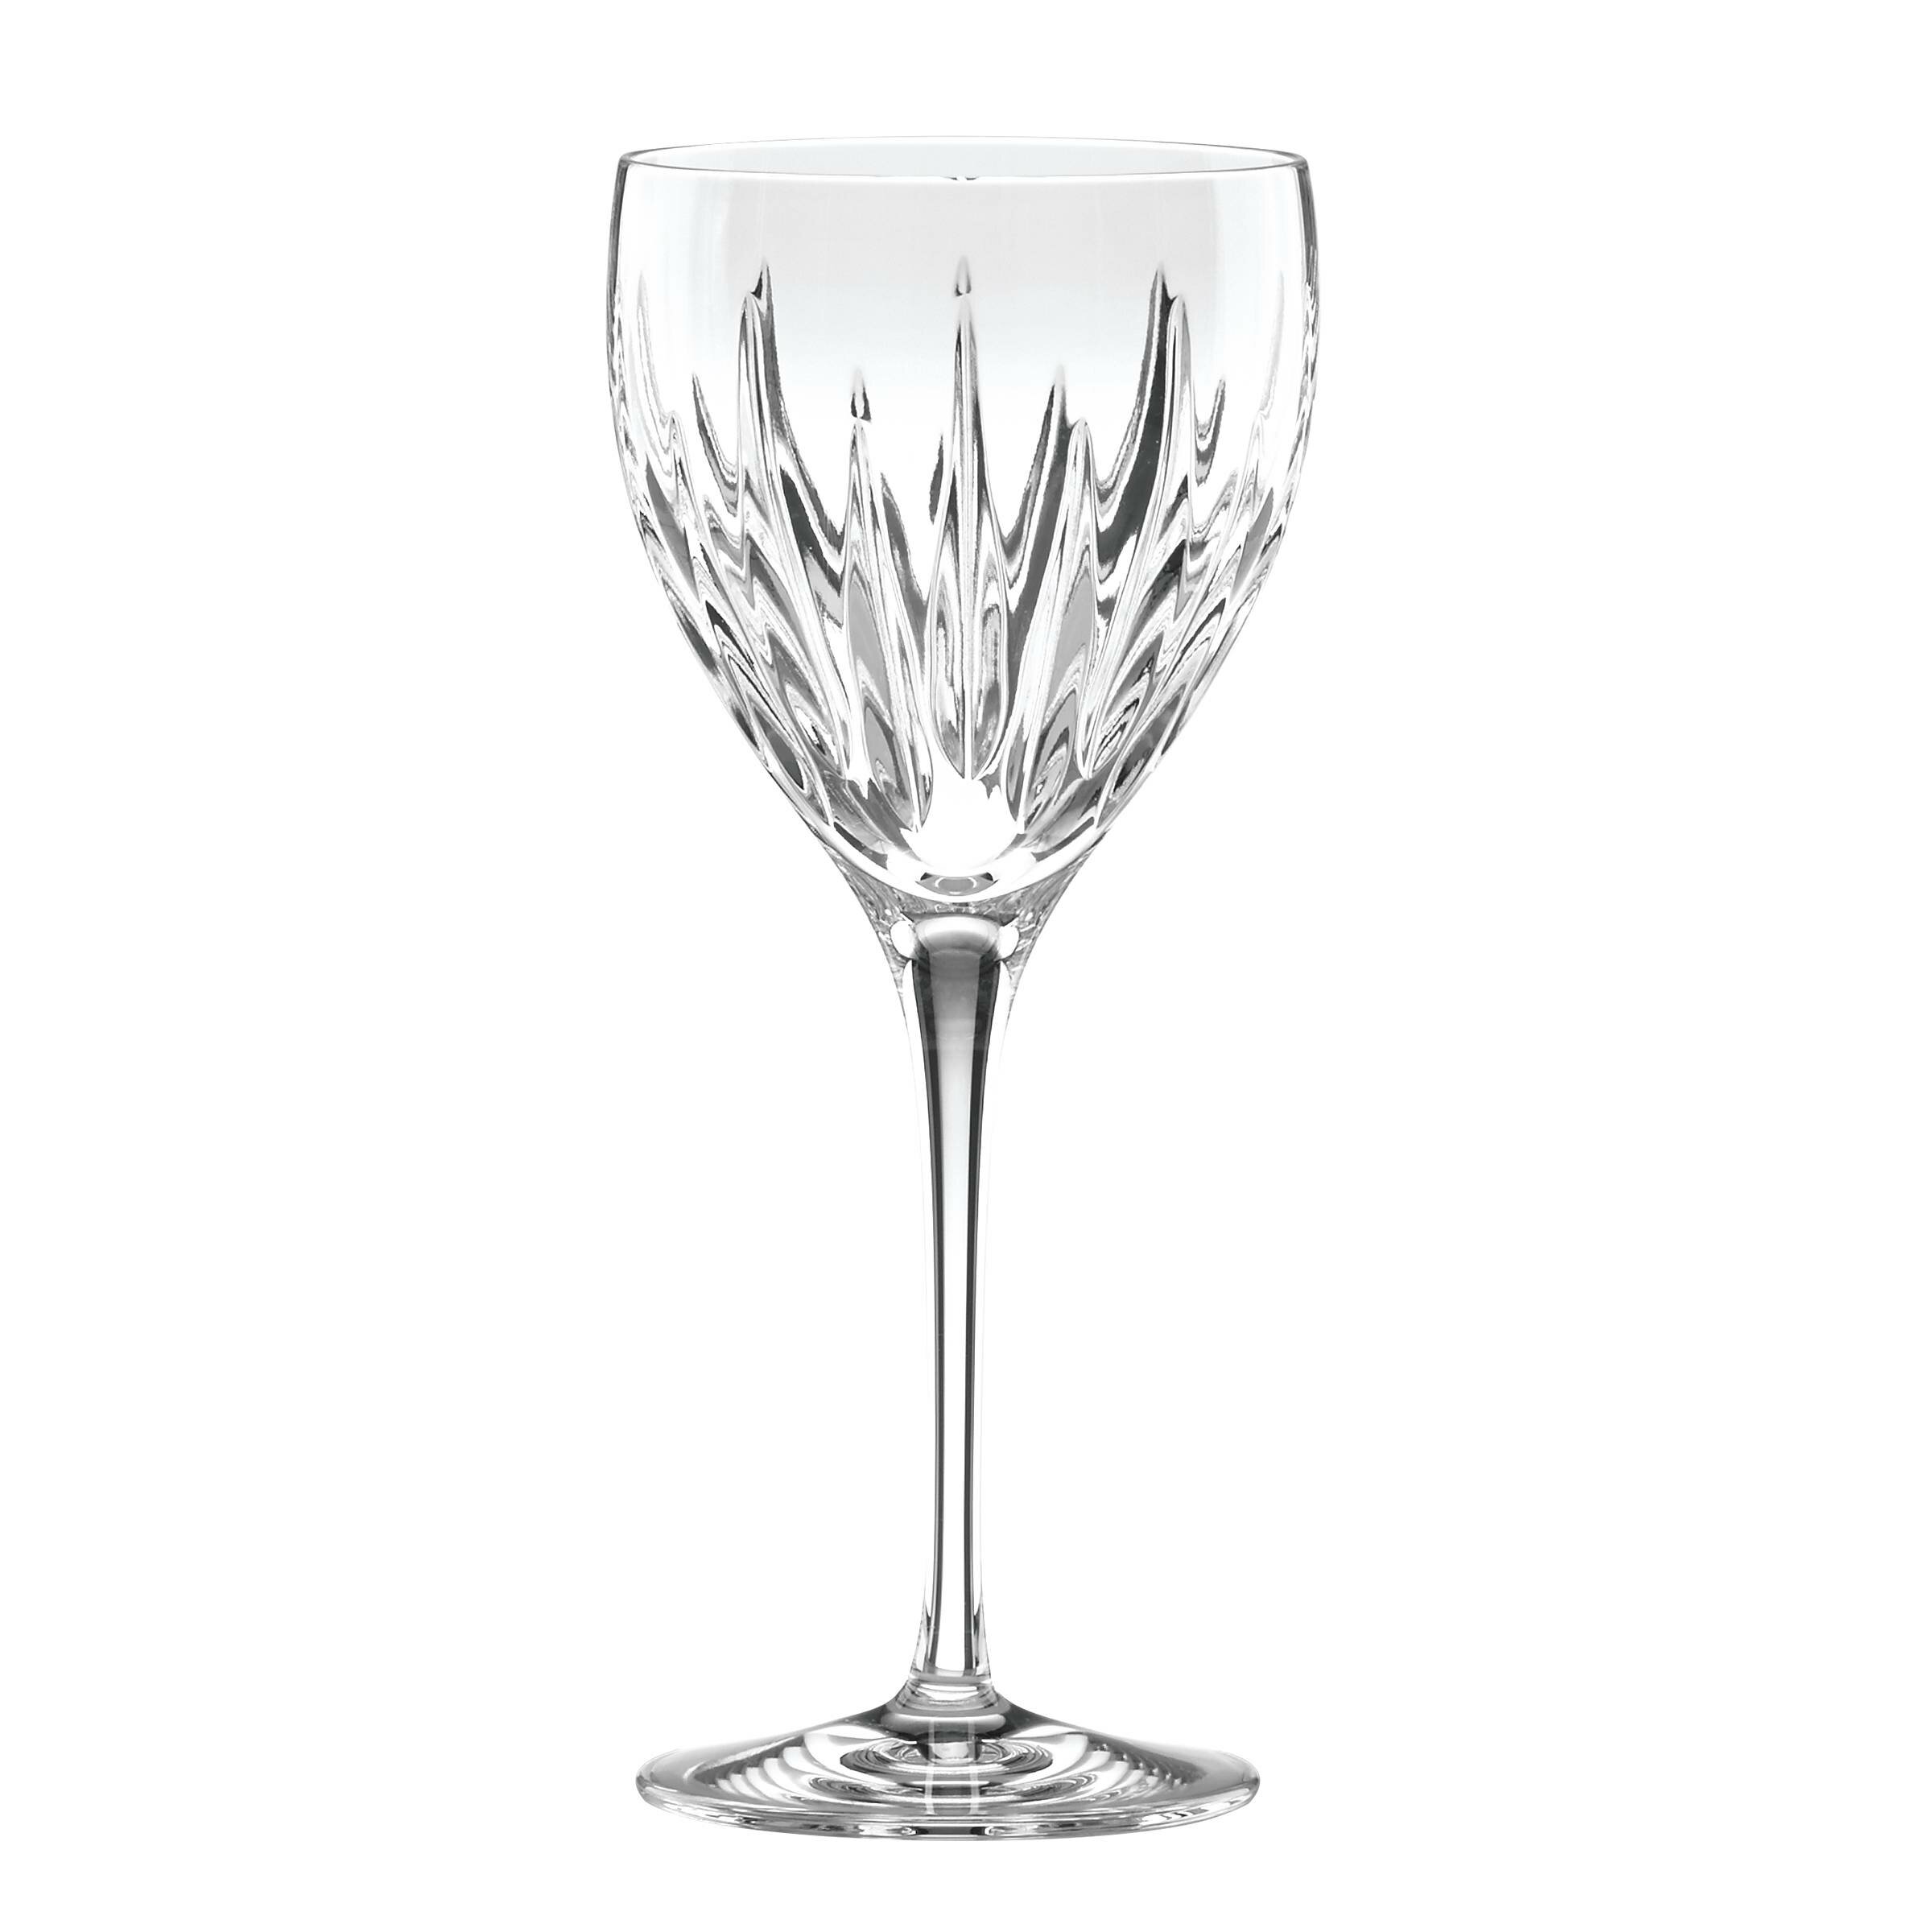 Soho Wine Glass